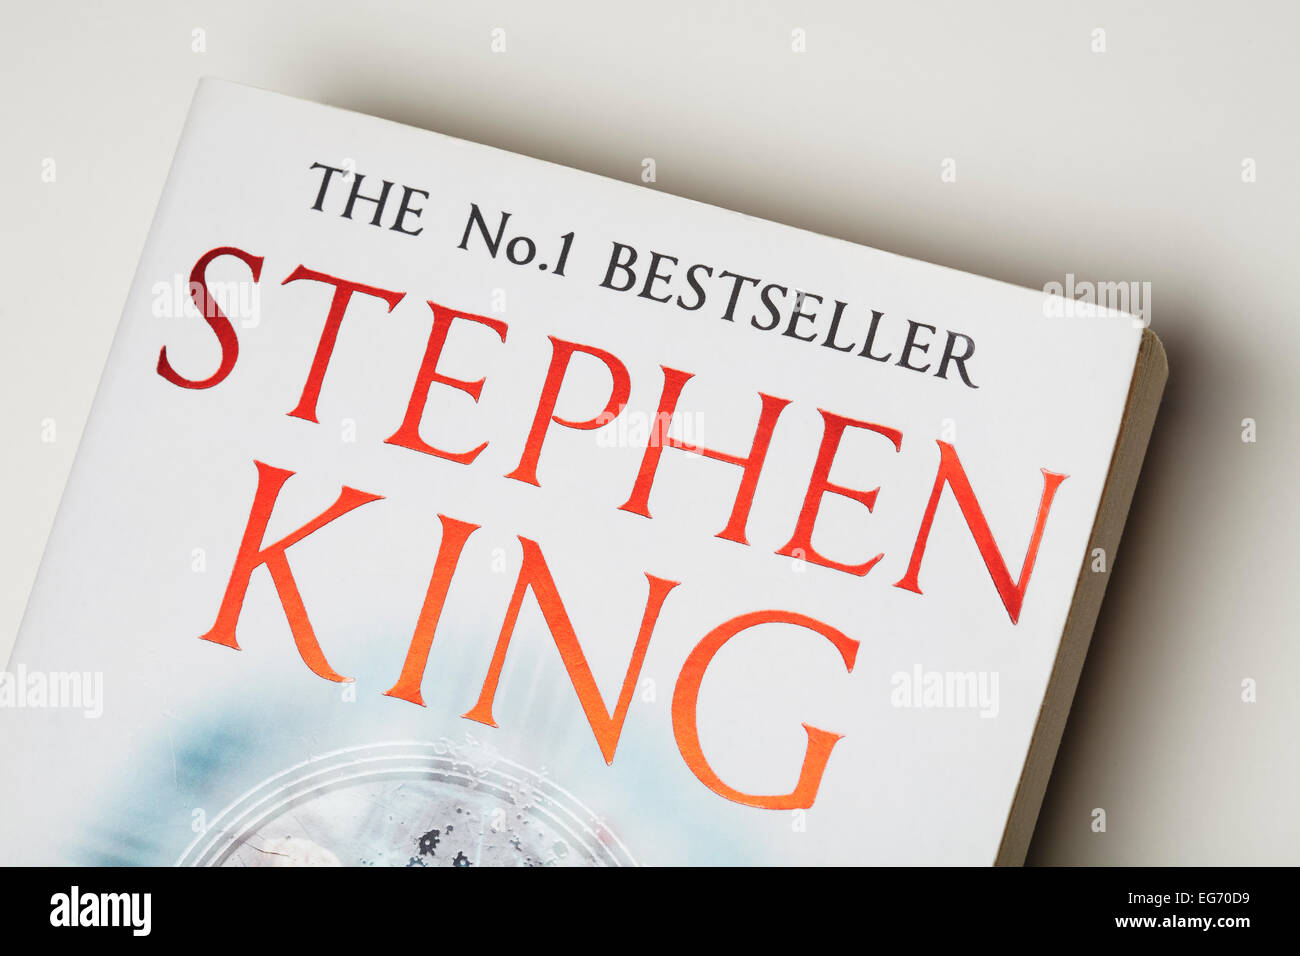 Stephen King libro - dettaglio Foto Stock